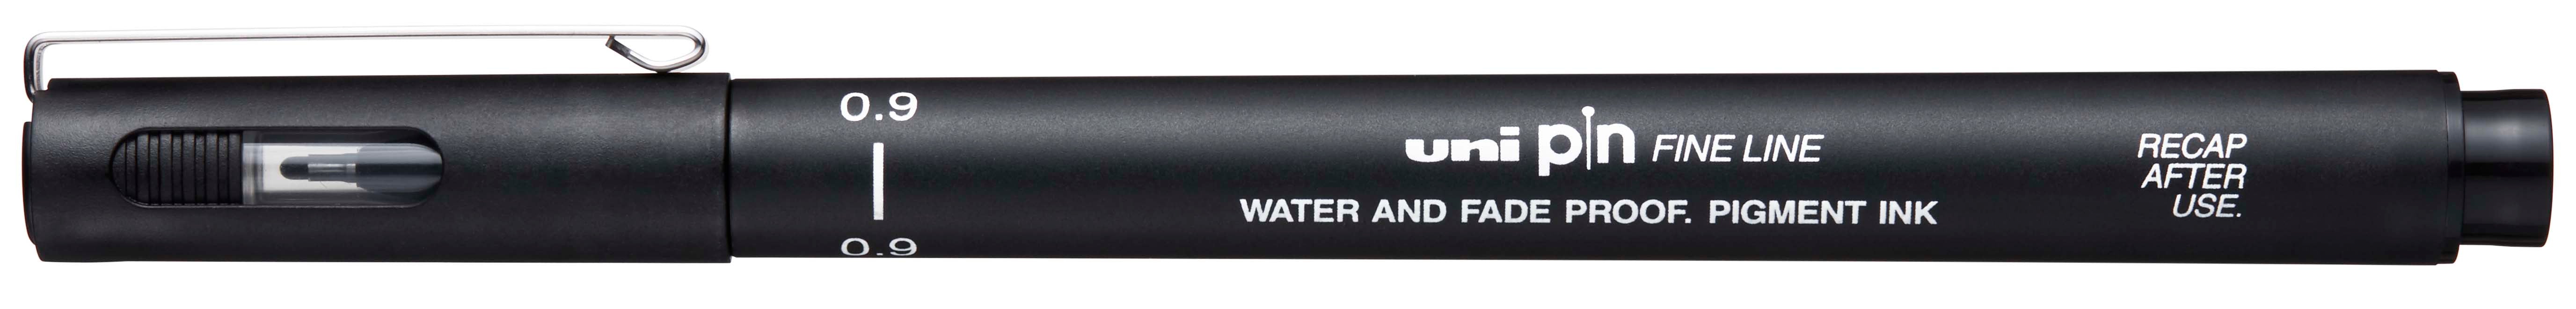 Uni pin 09 vlack waterproof artists liner pen